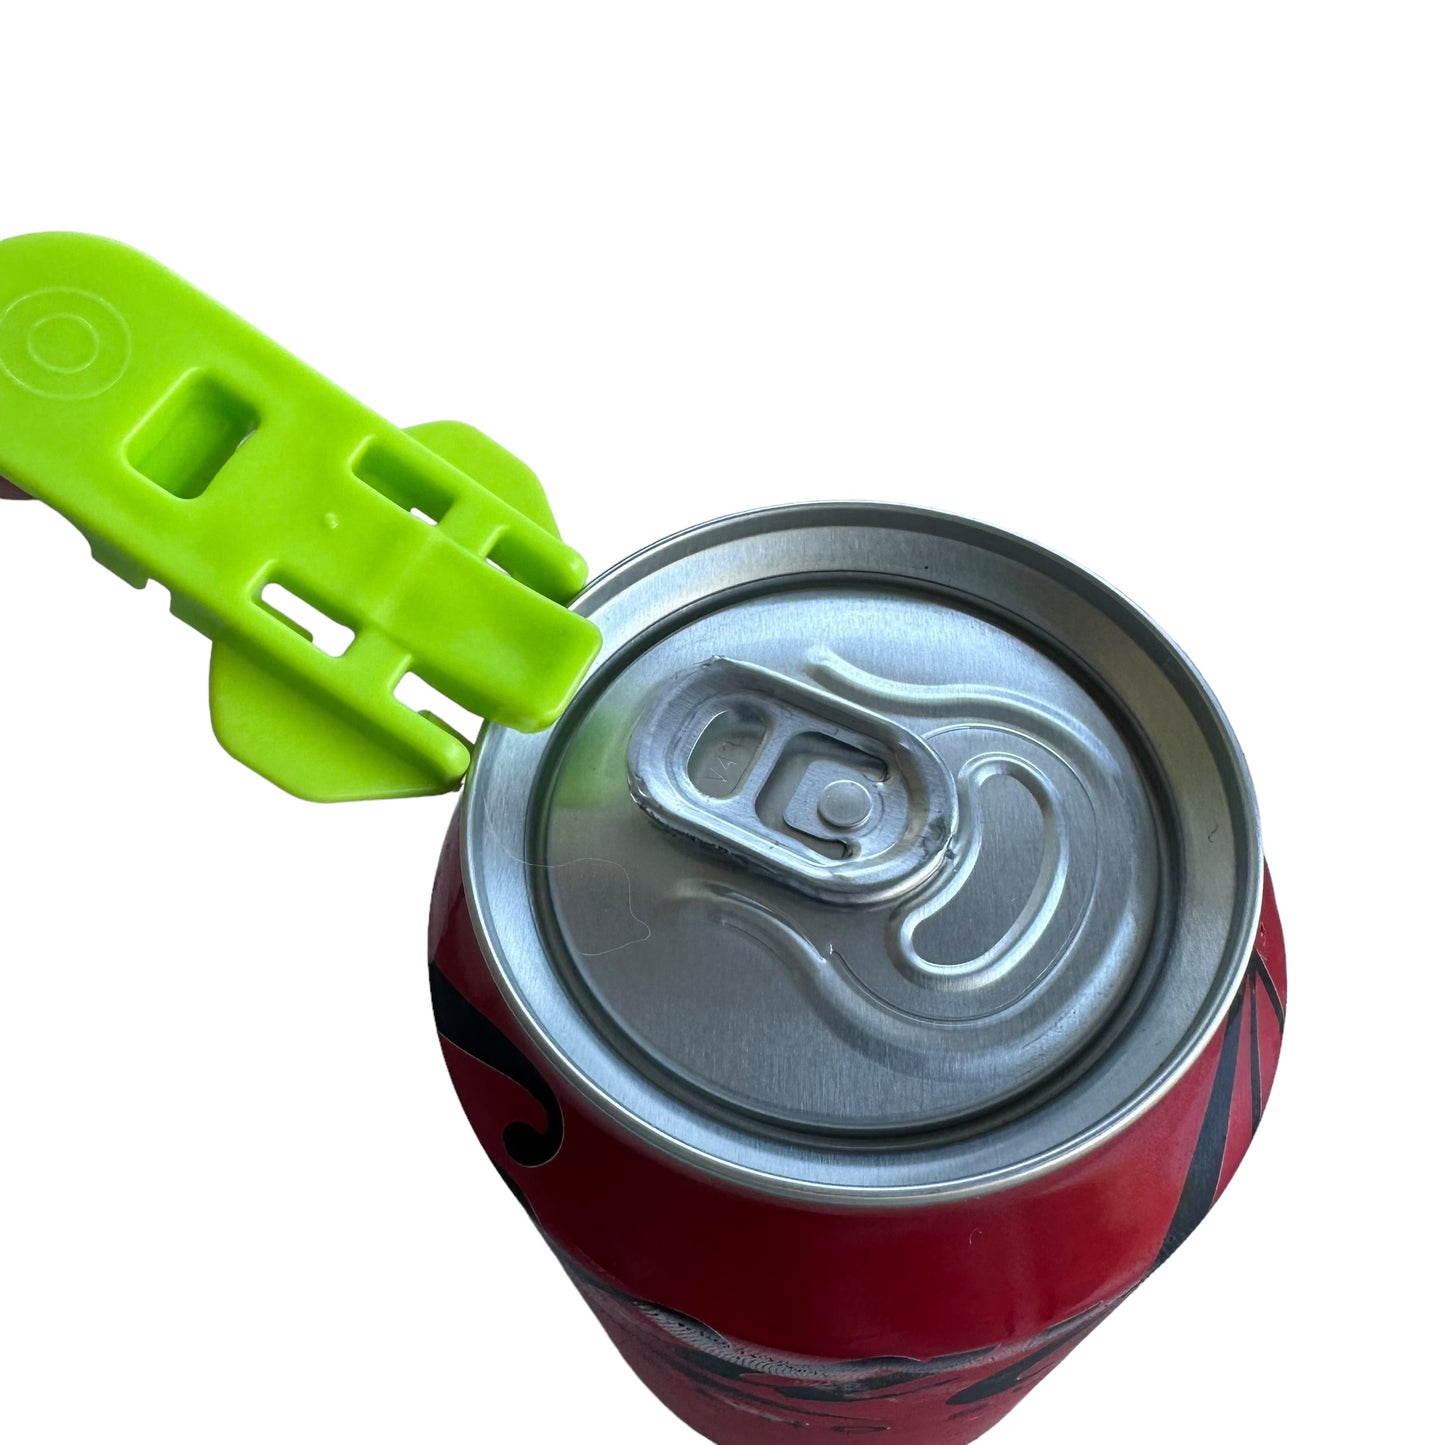 Soda Can Opener